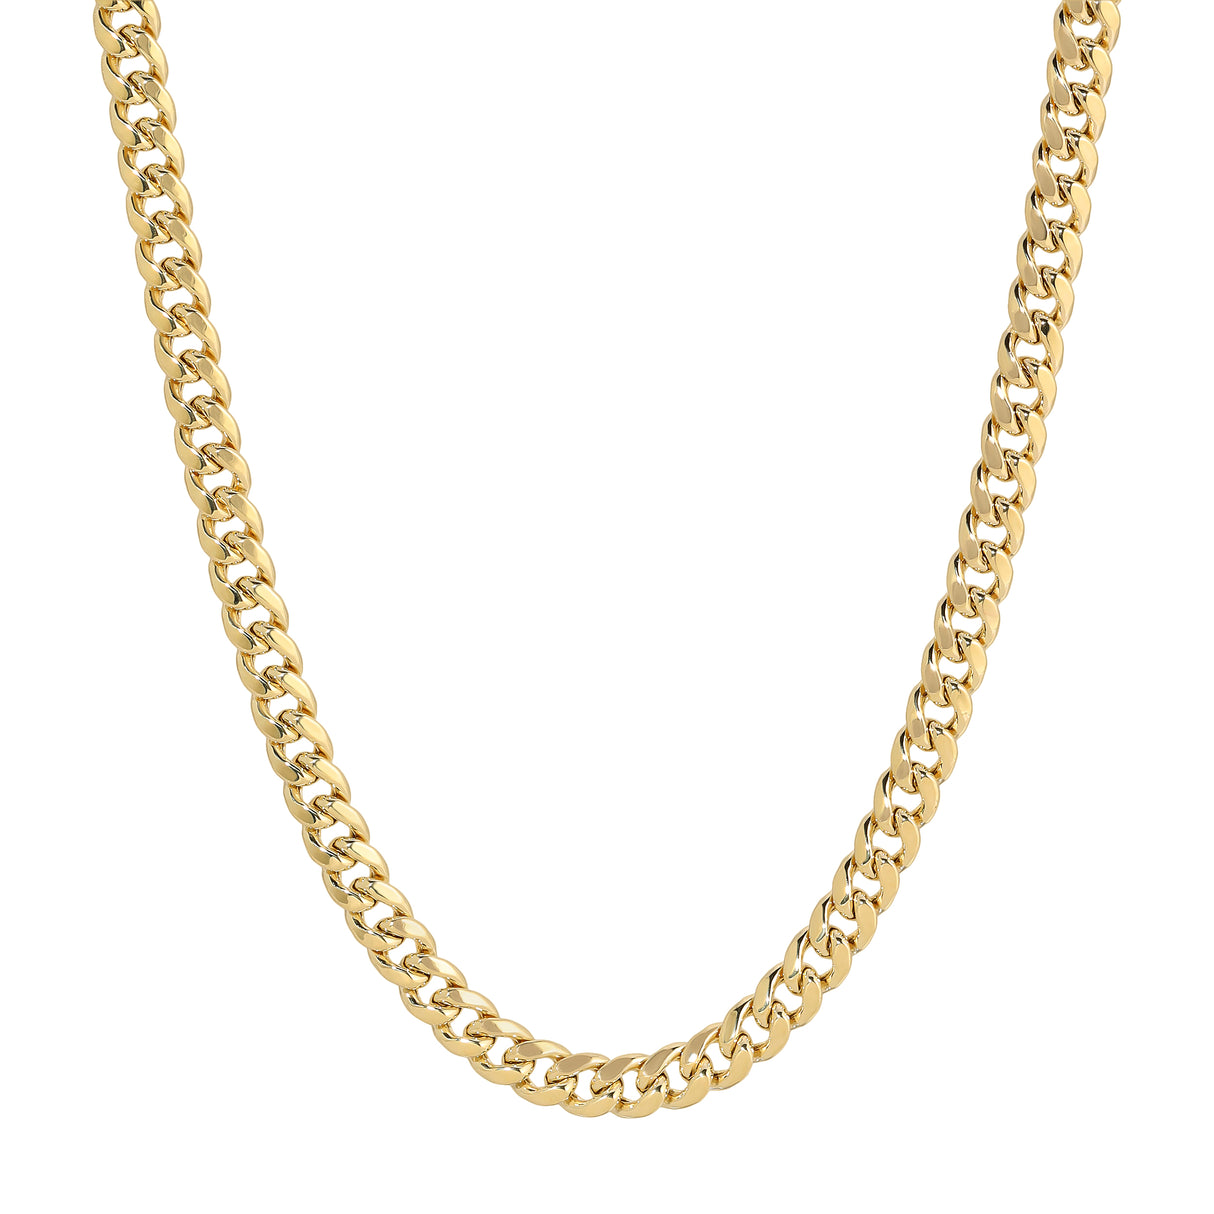 Men's 14K gold Miami Cuban chain necklace at Italian Fashions